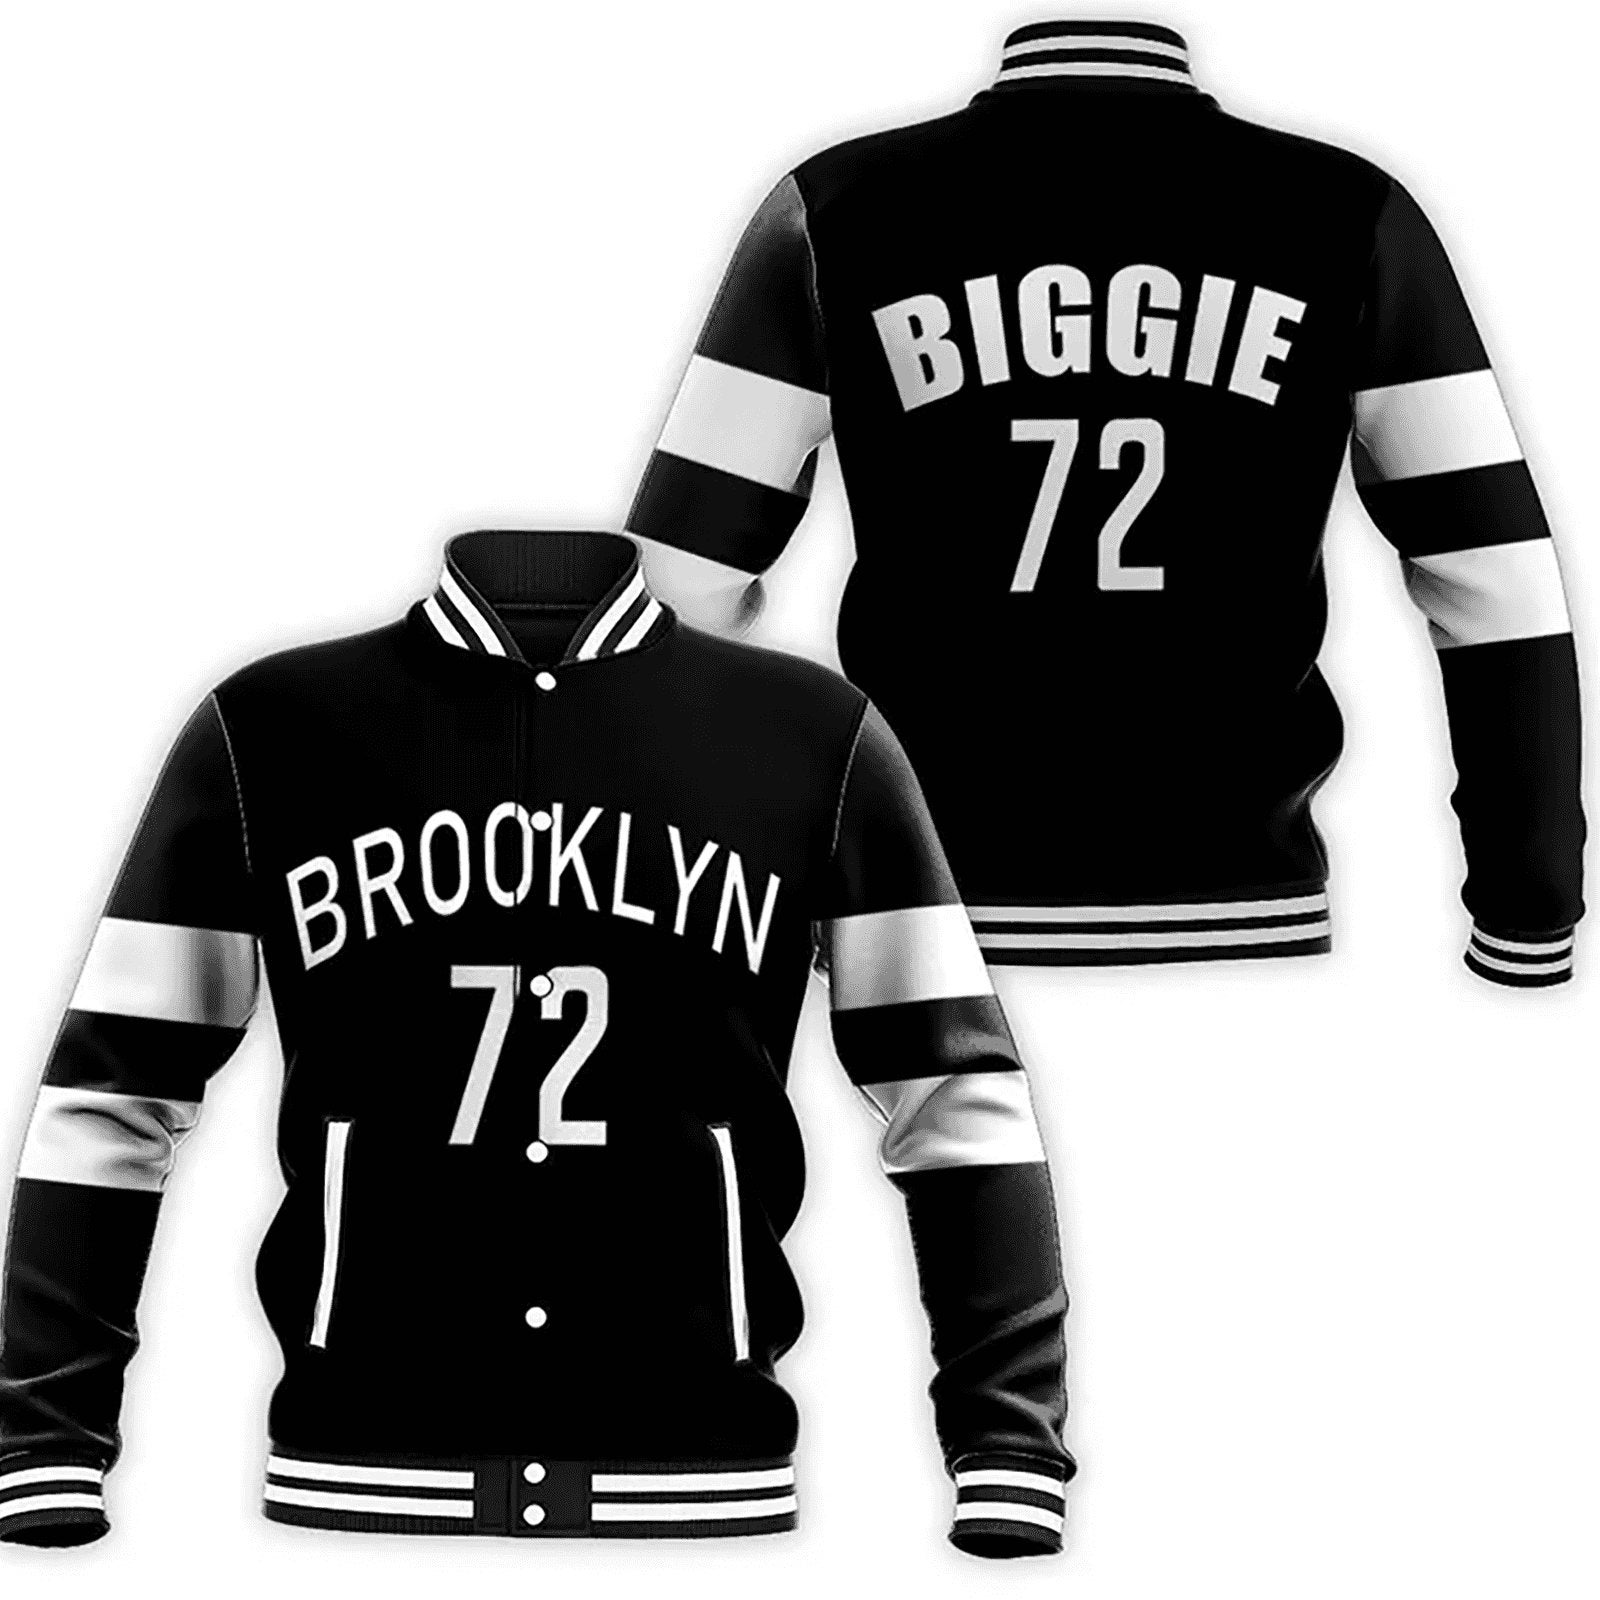 Rare NBA BROOKLYN NETS City Edition White BIGGIE JERSEY Men's Size